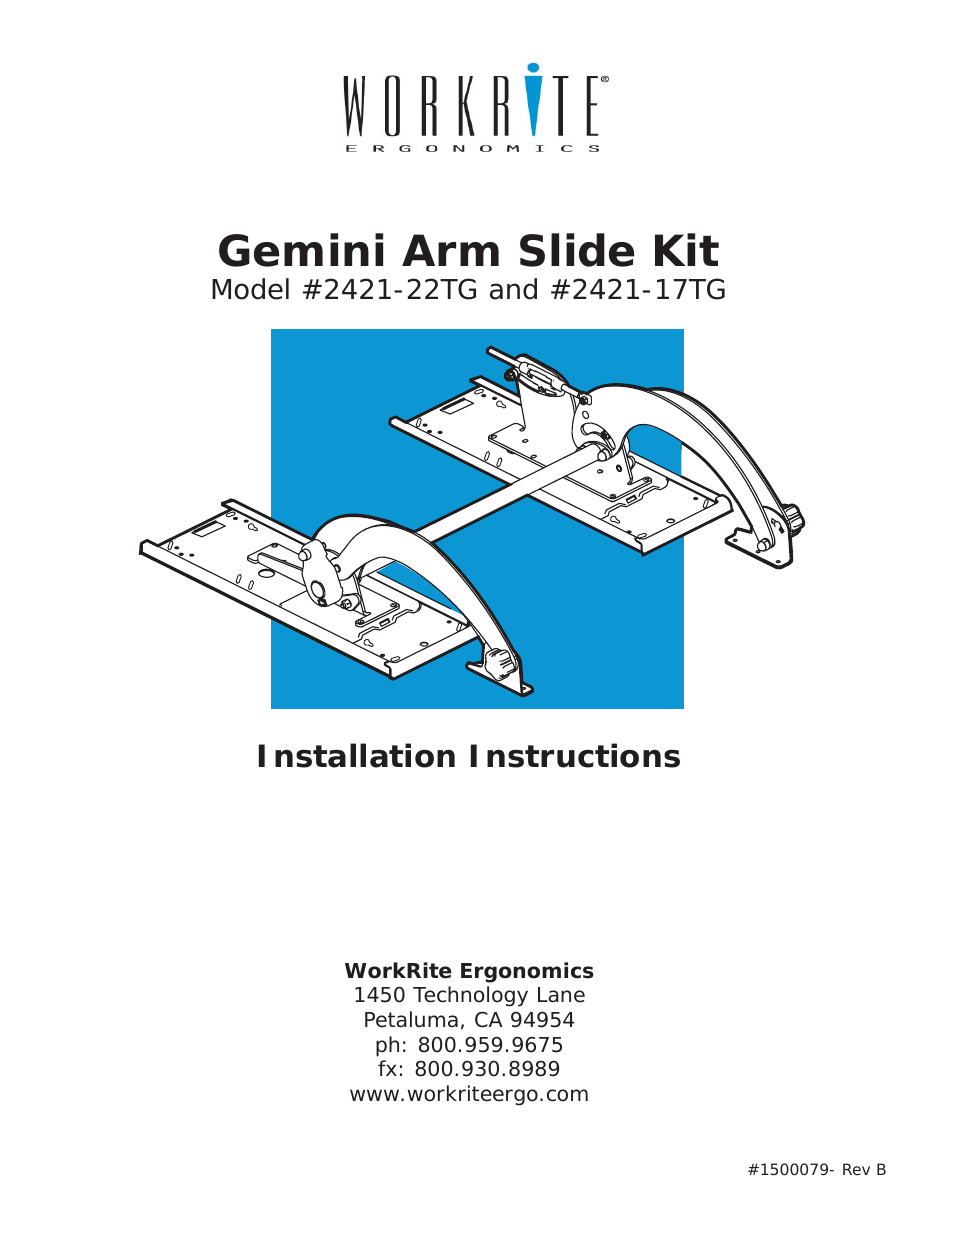 2421-22TG Gemini Arm Slide